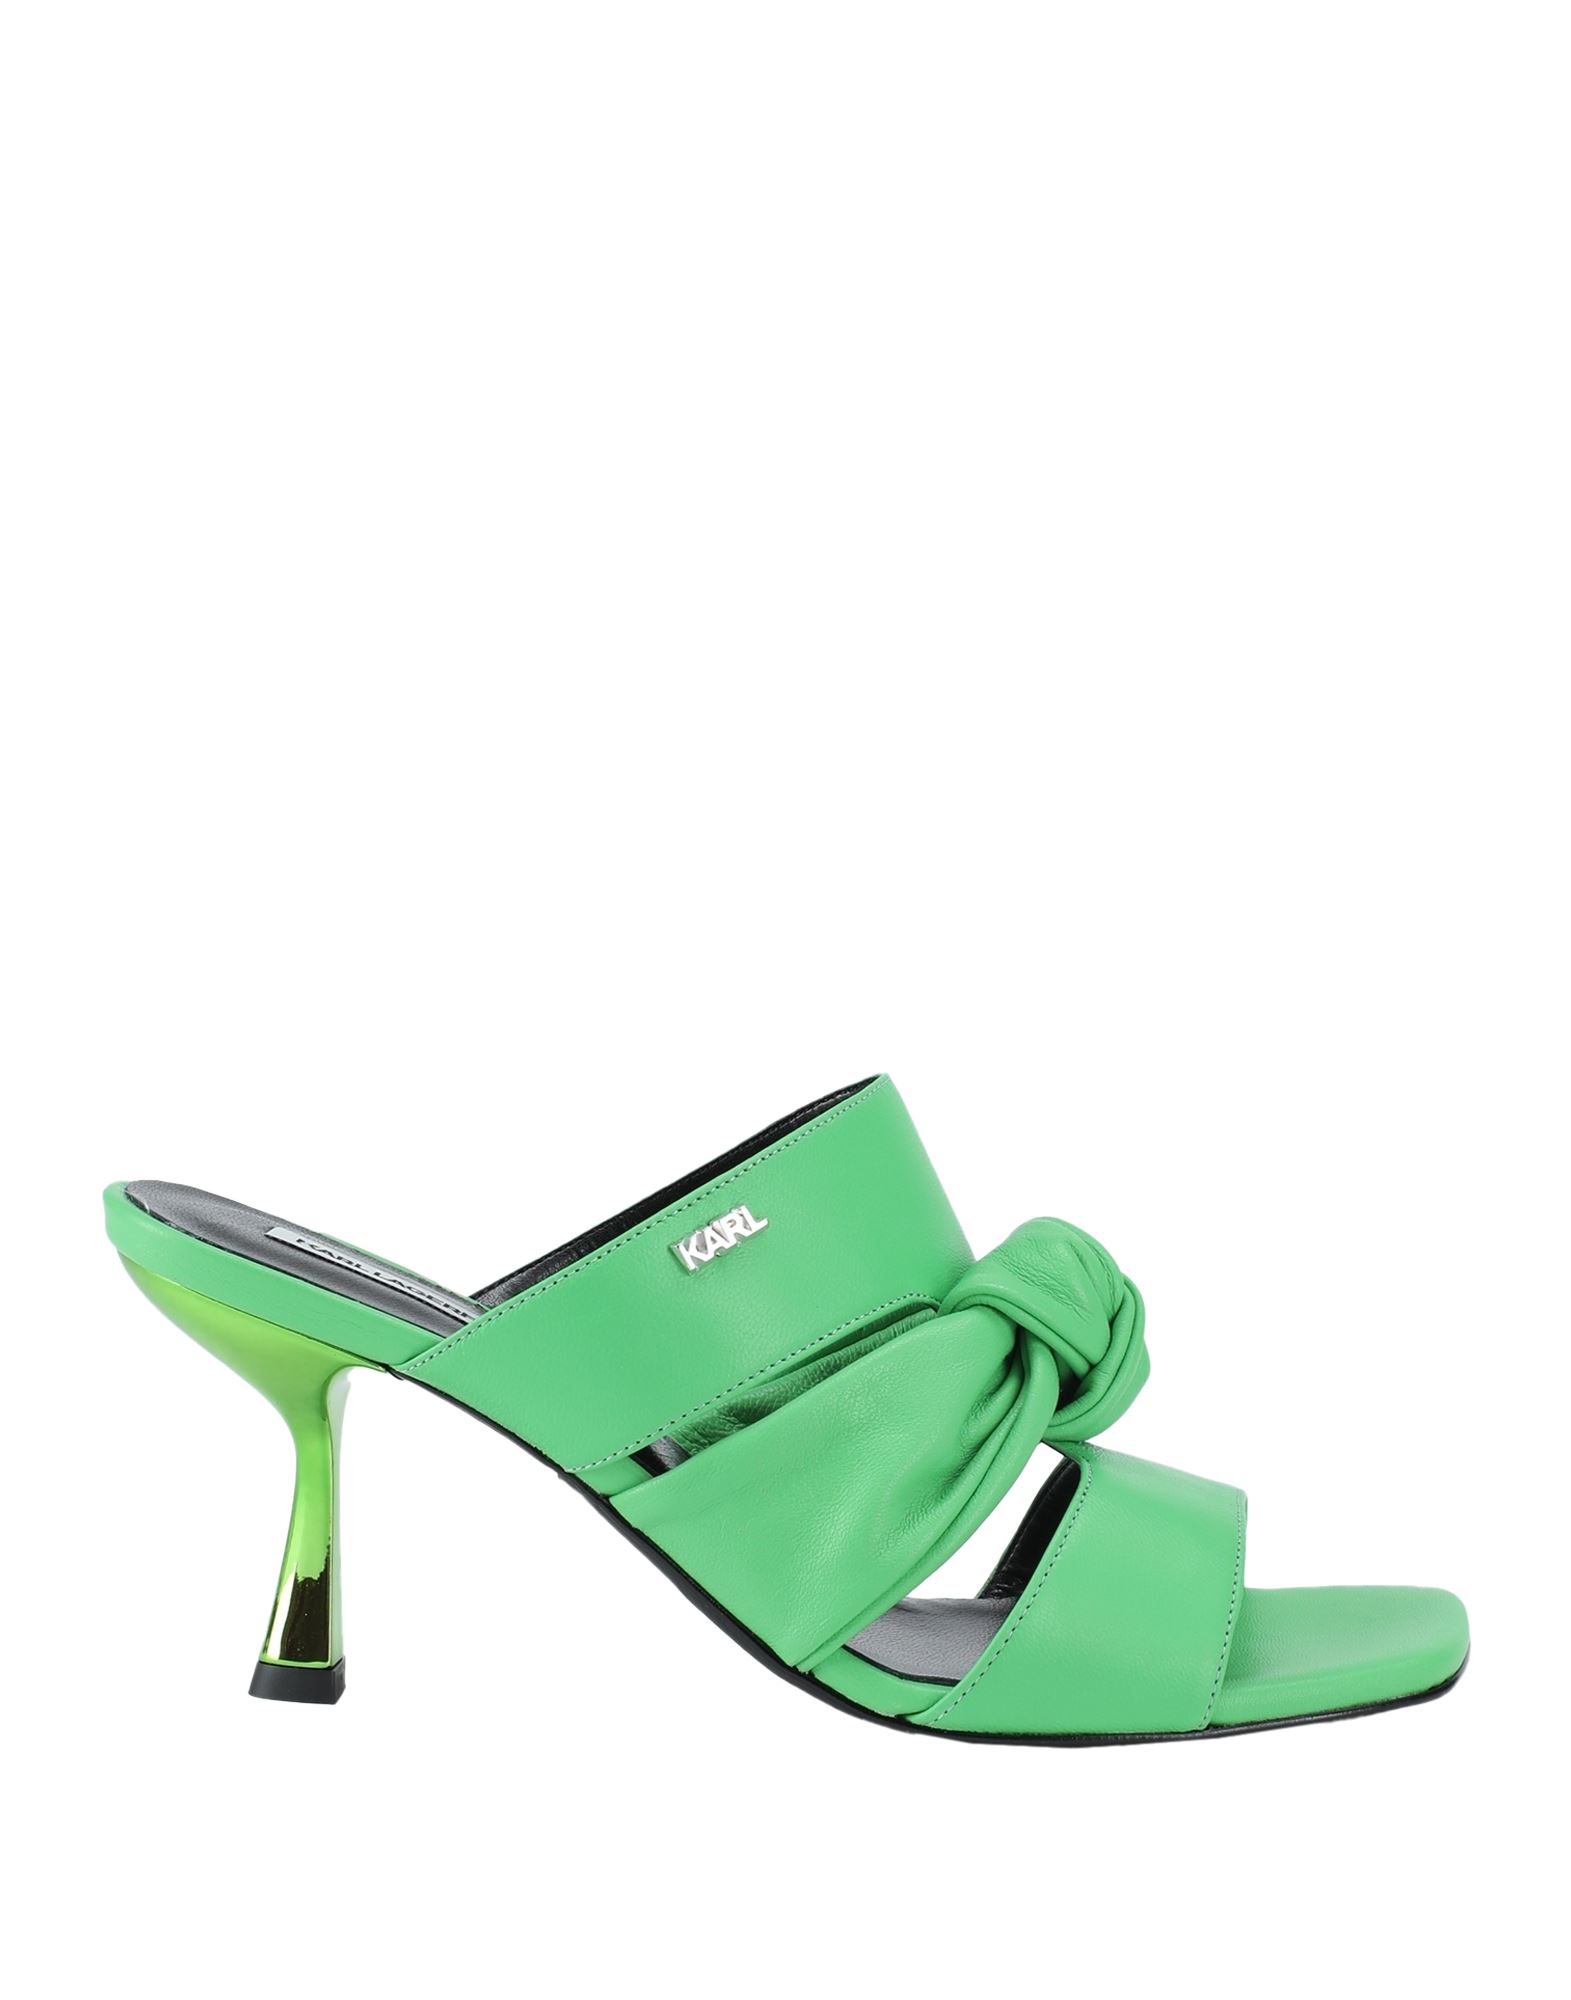 Karl Lagerfeld Sandals In Green